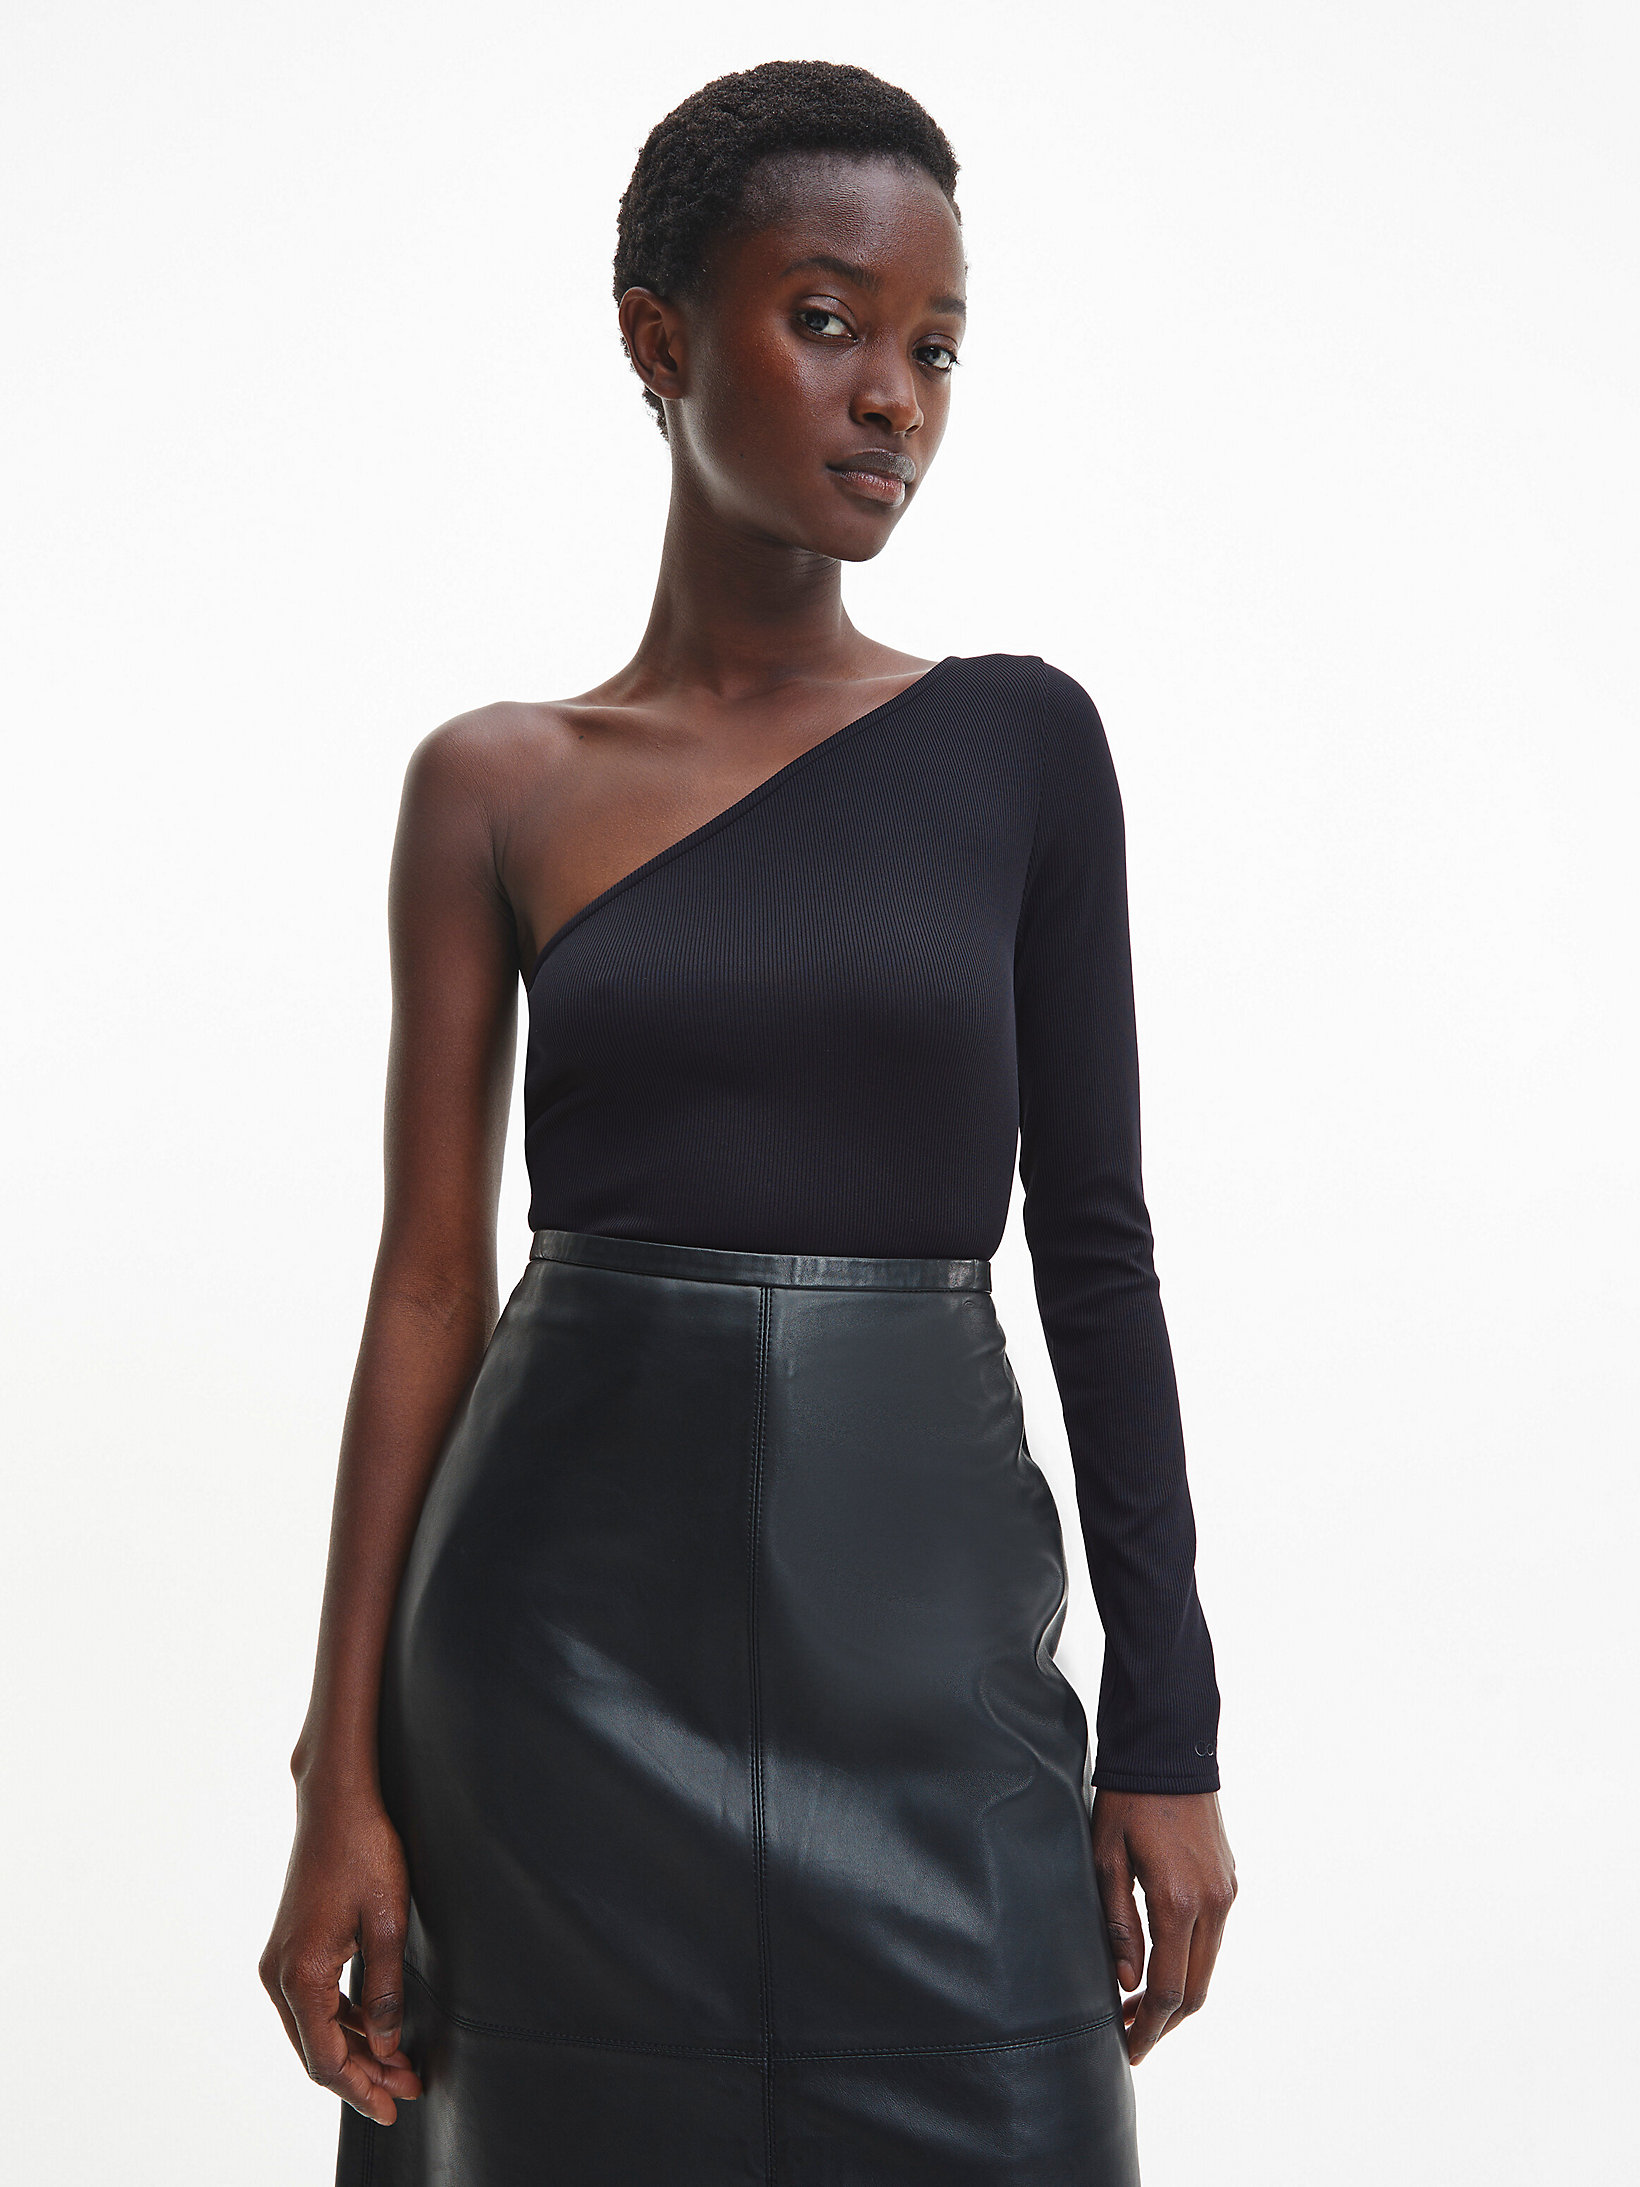 CK Black Skinny One Shoulder Top undefined women Calvin Klein